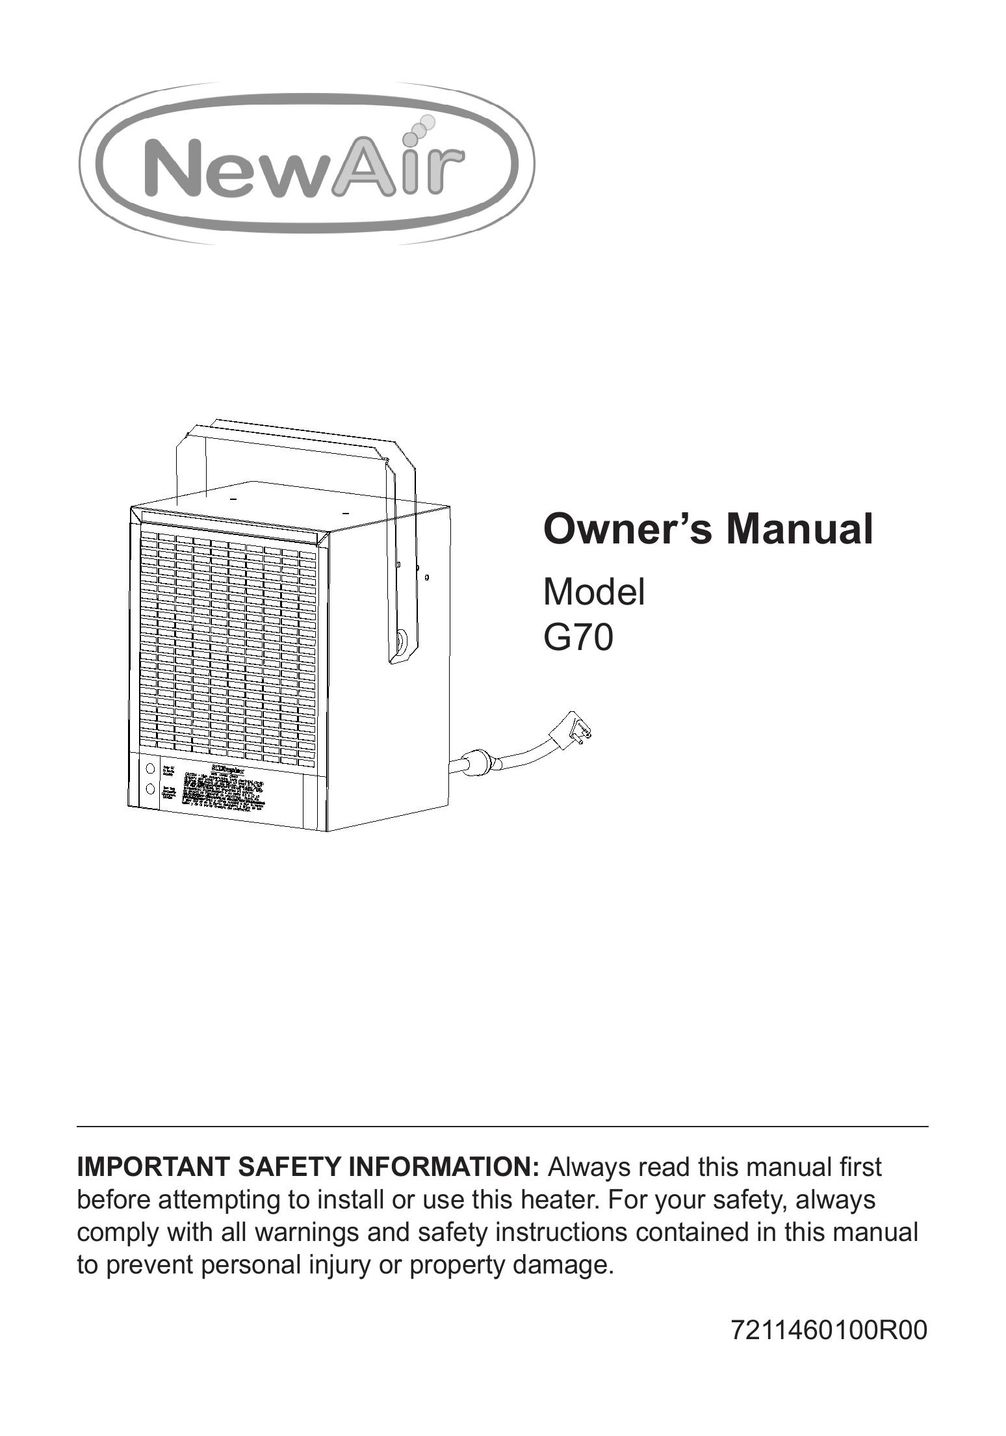 NewAir G70 Electric Heater User Manual